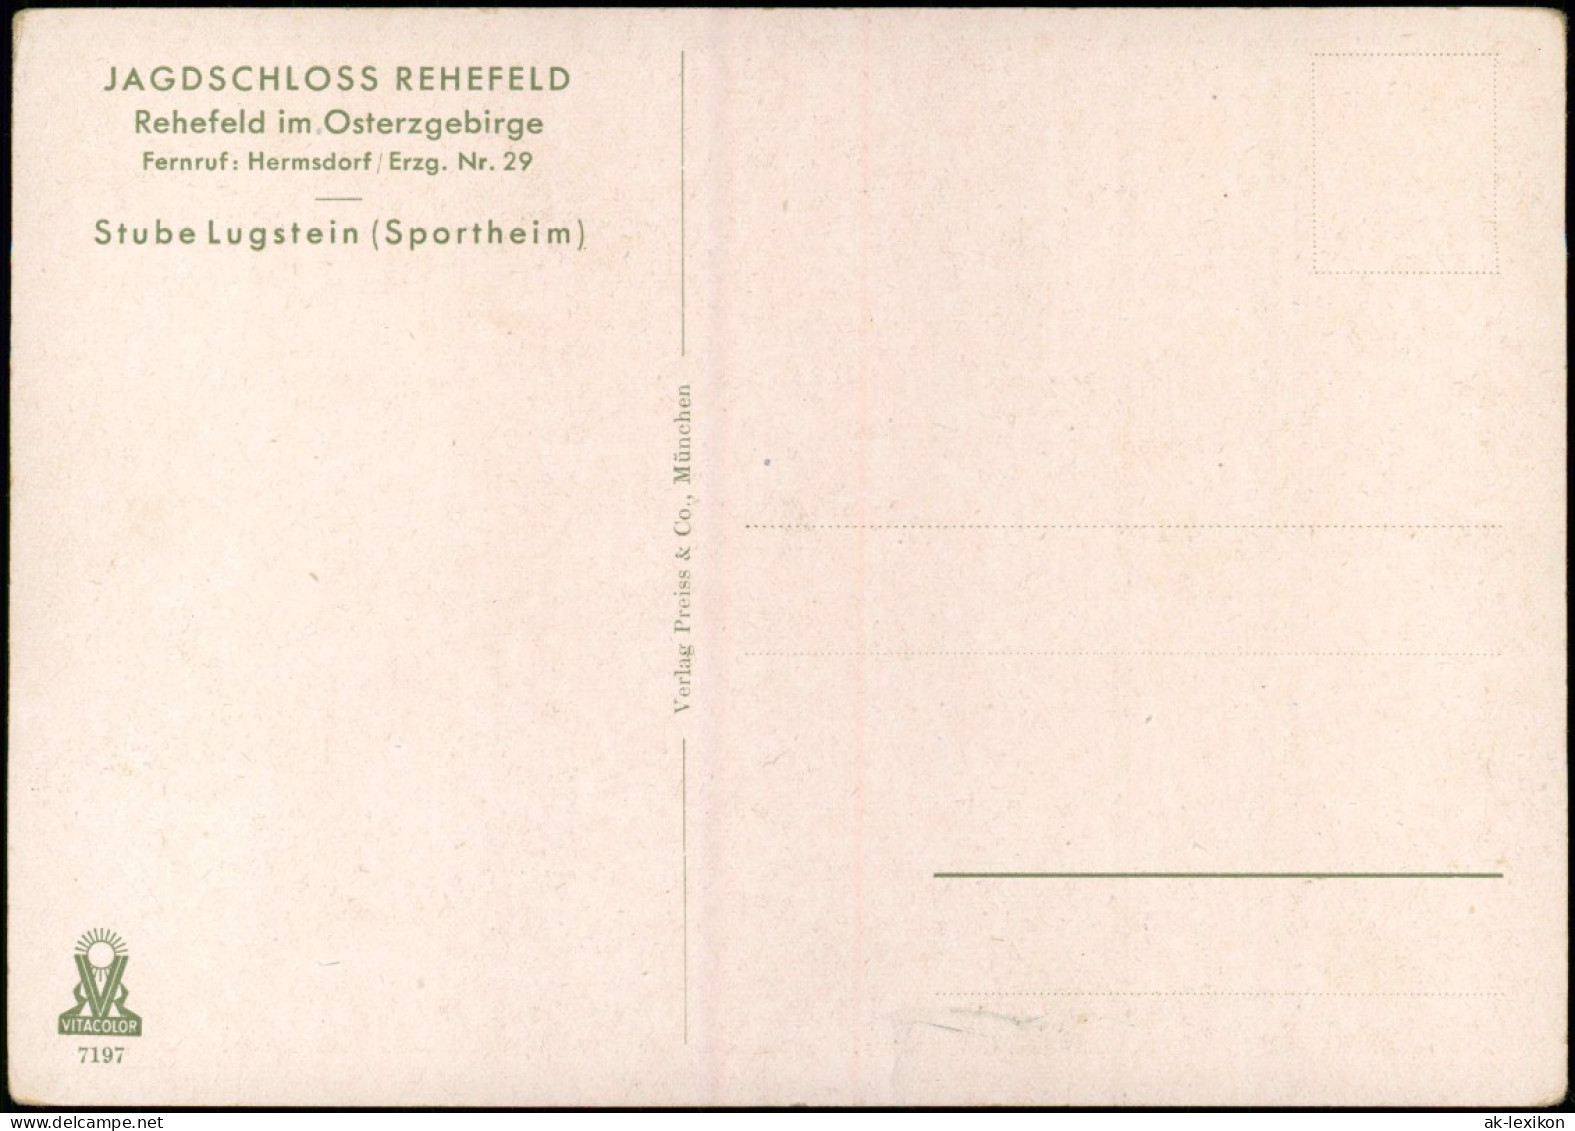 Rehefeld-Altenberg (Erzgebirge) Jagdschloss - Stube Lugstein (Sportheim) 1928 - Rehefeld